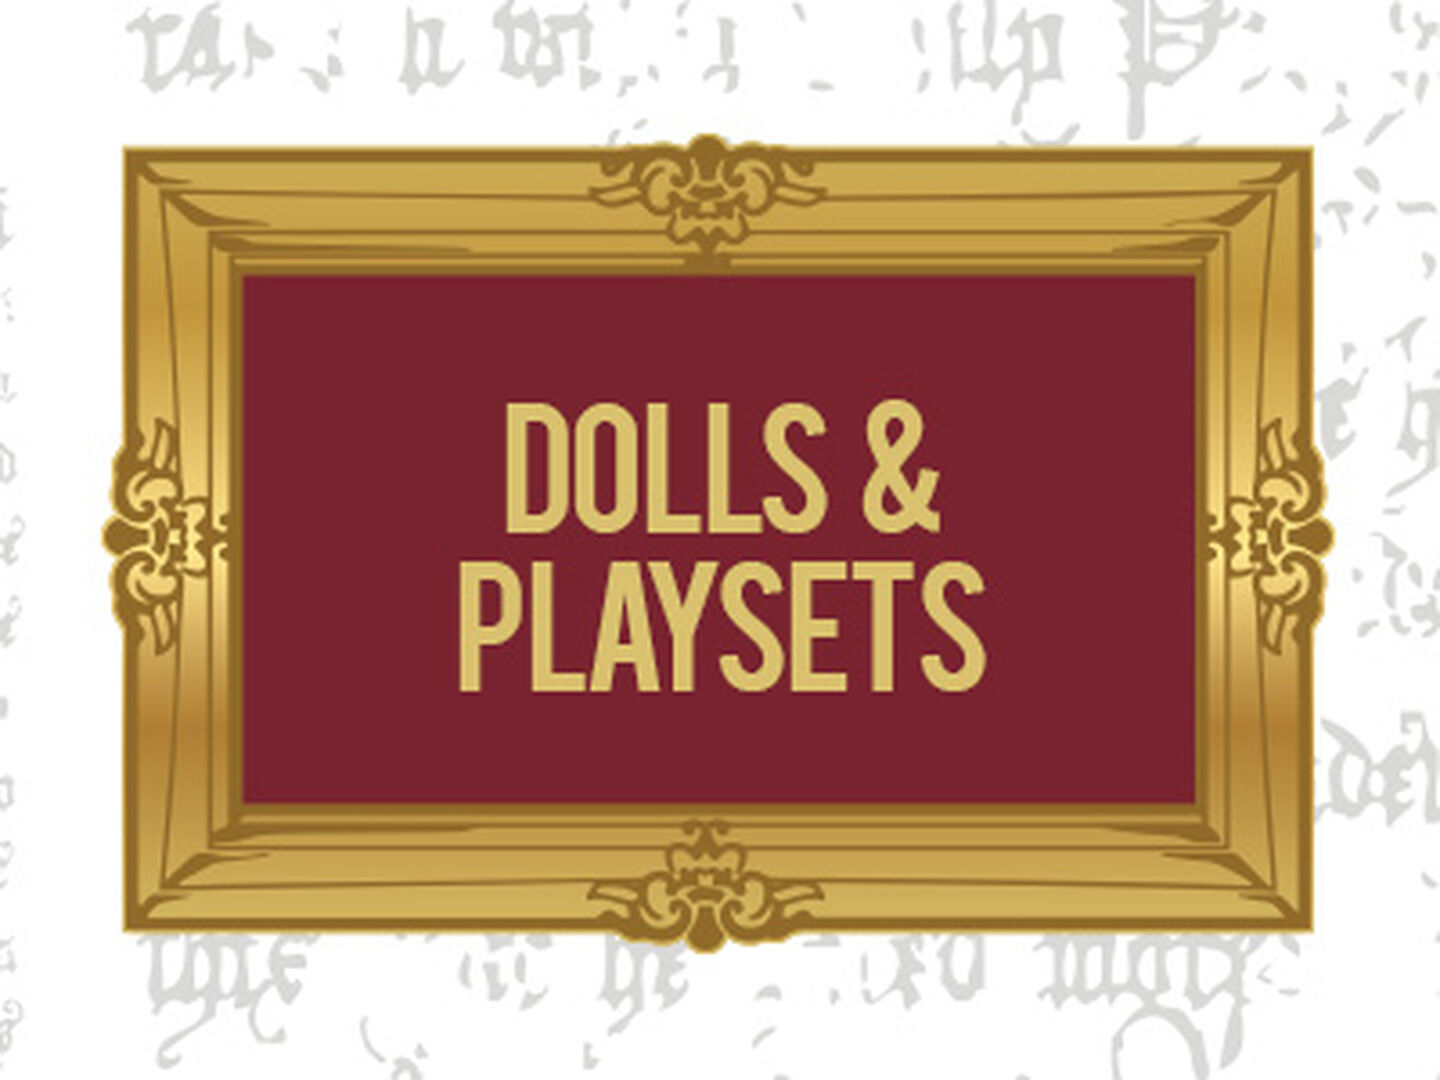 Harry Potter Dolls & Playsets